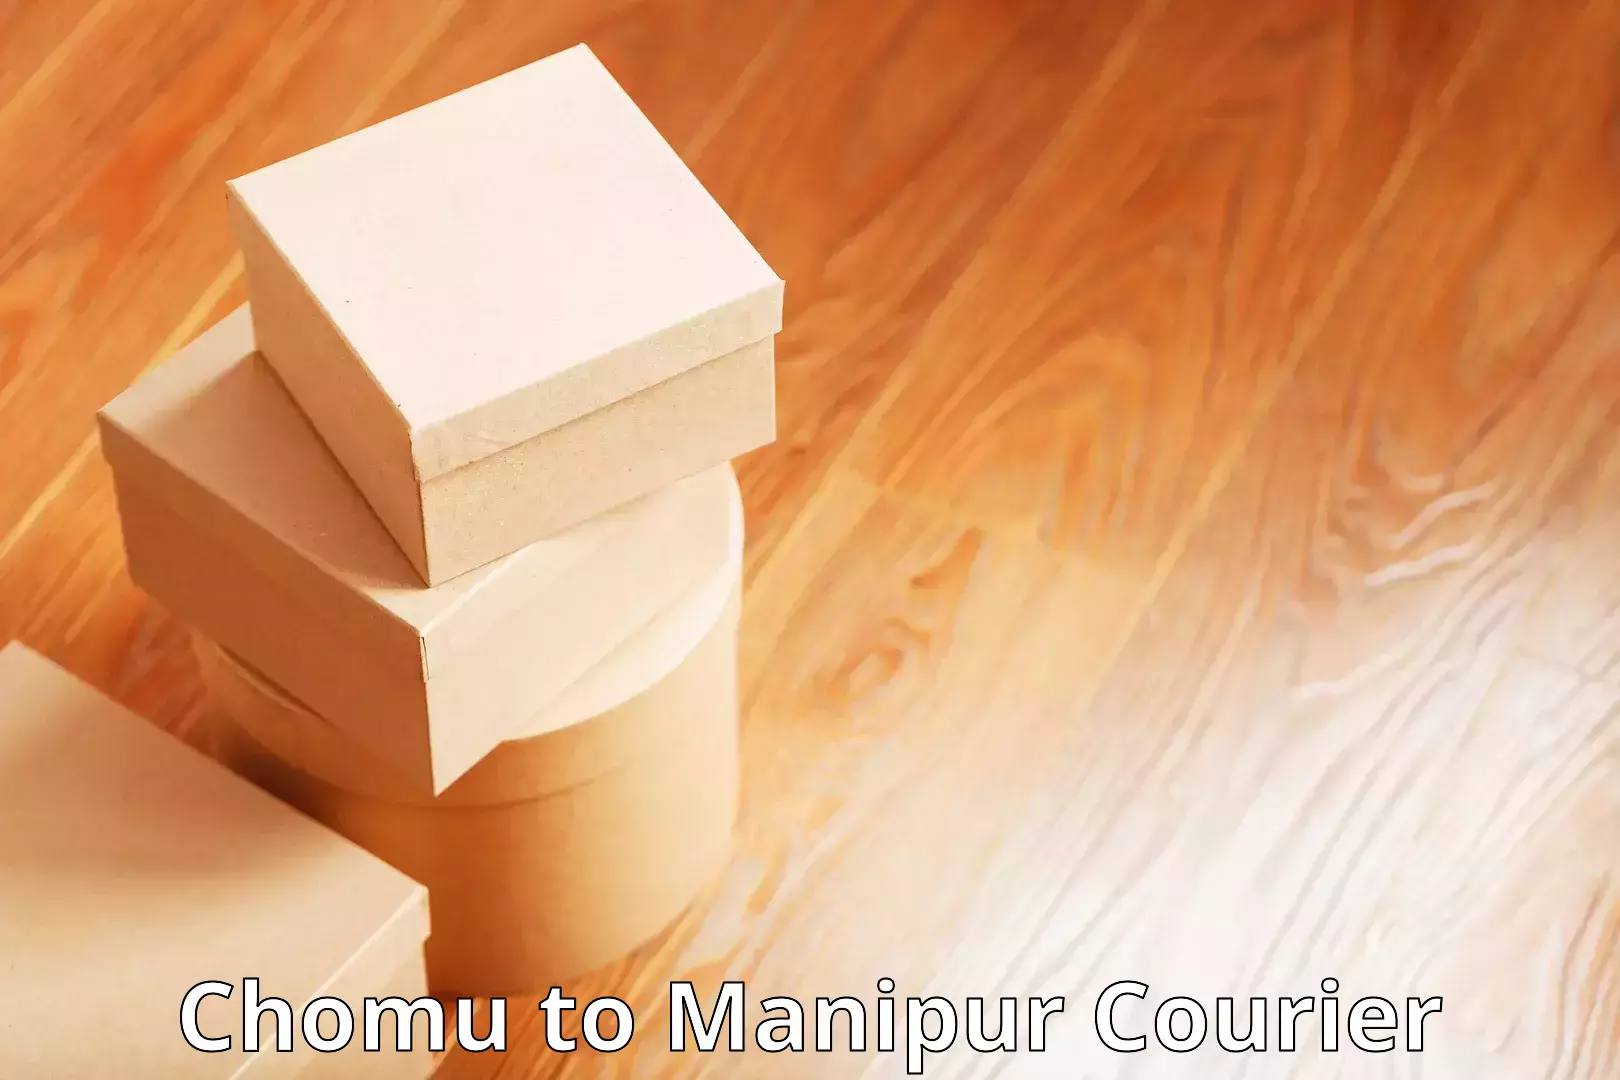 Logistics service provider Chomu to Manipur